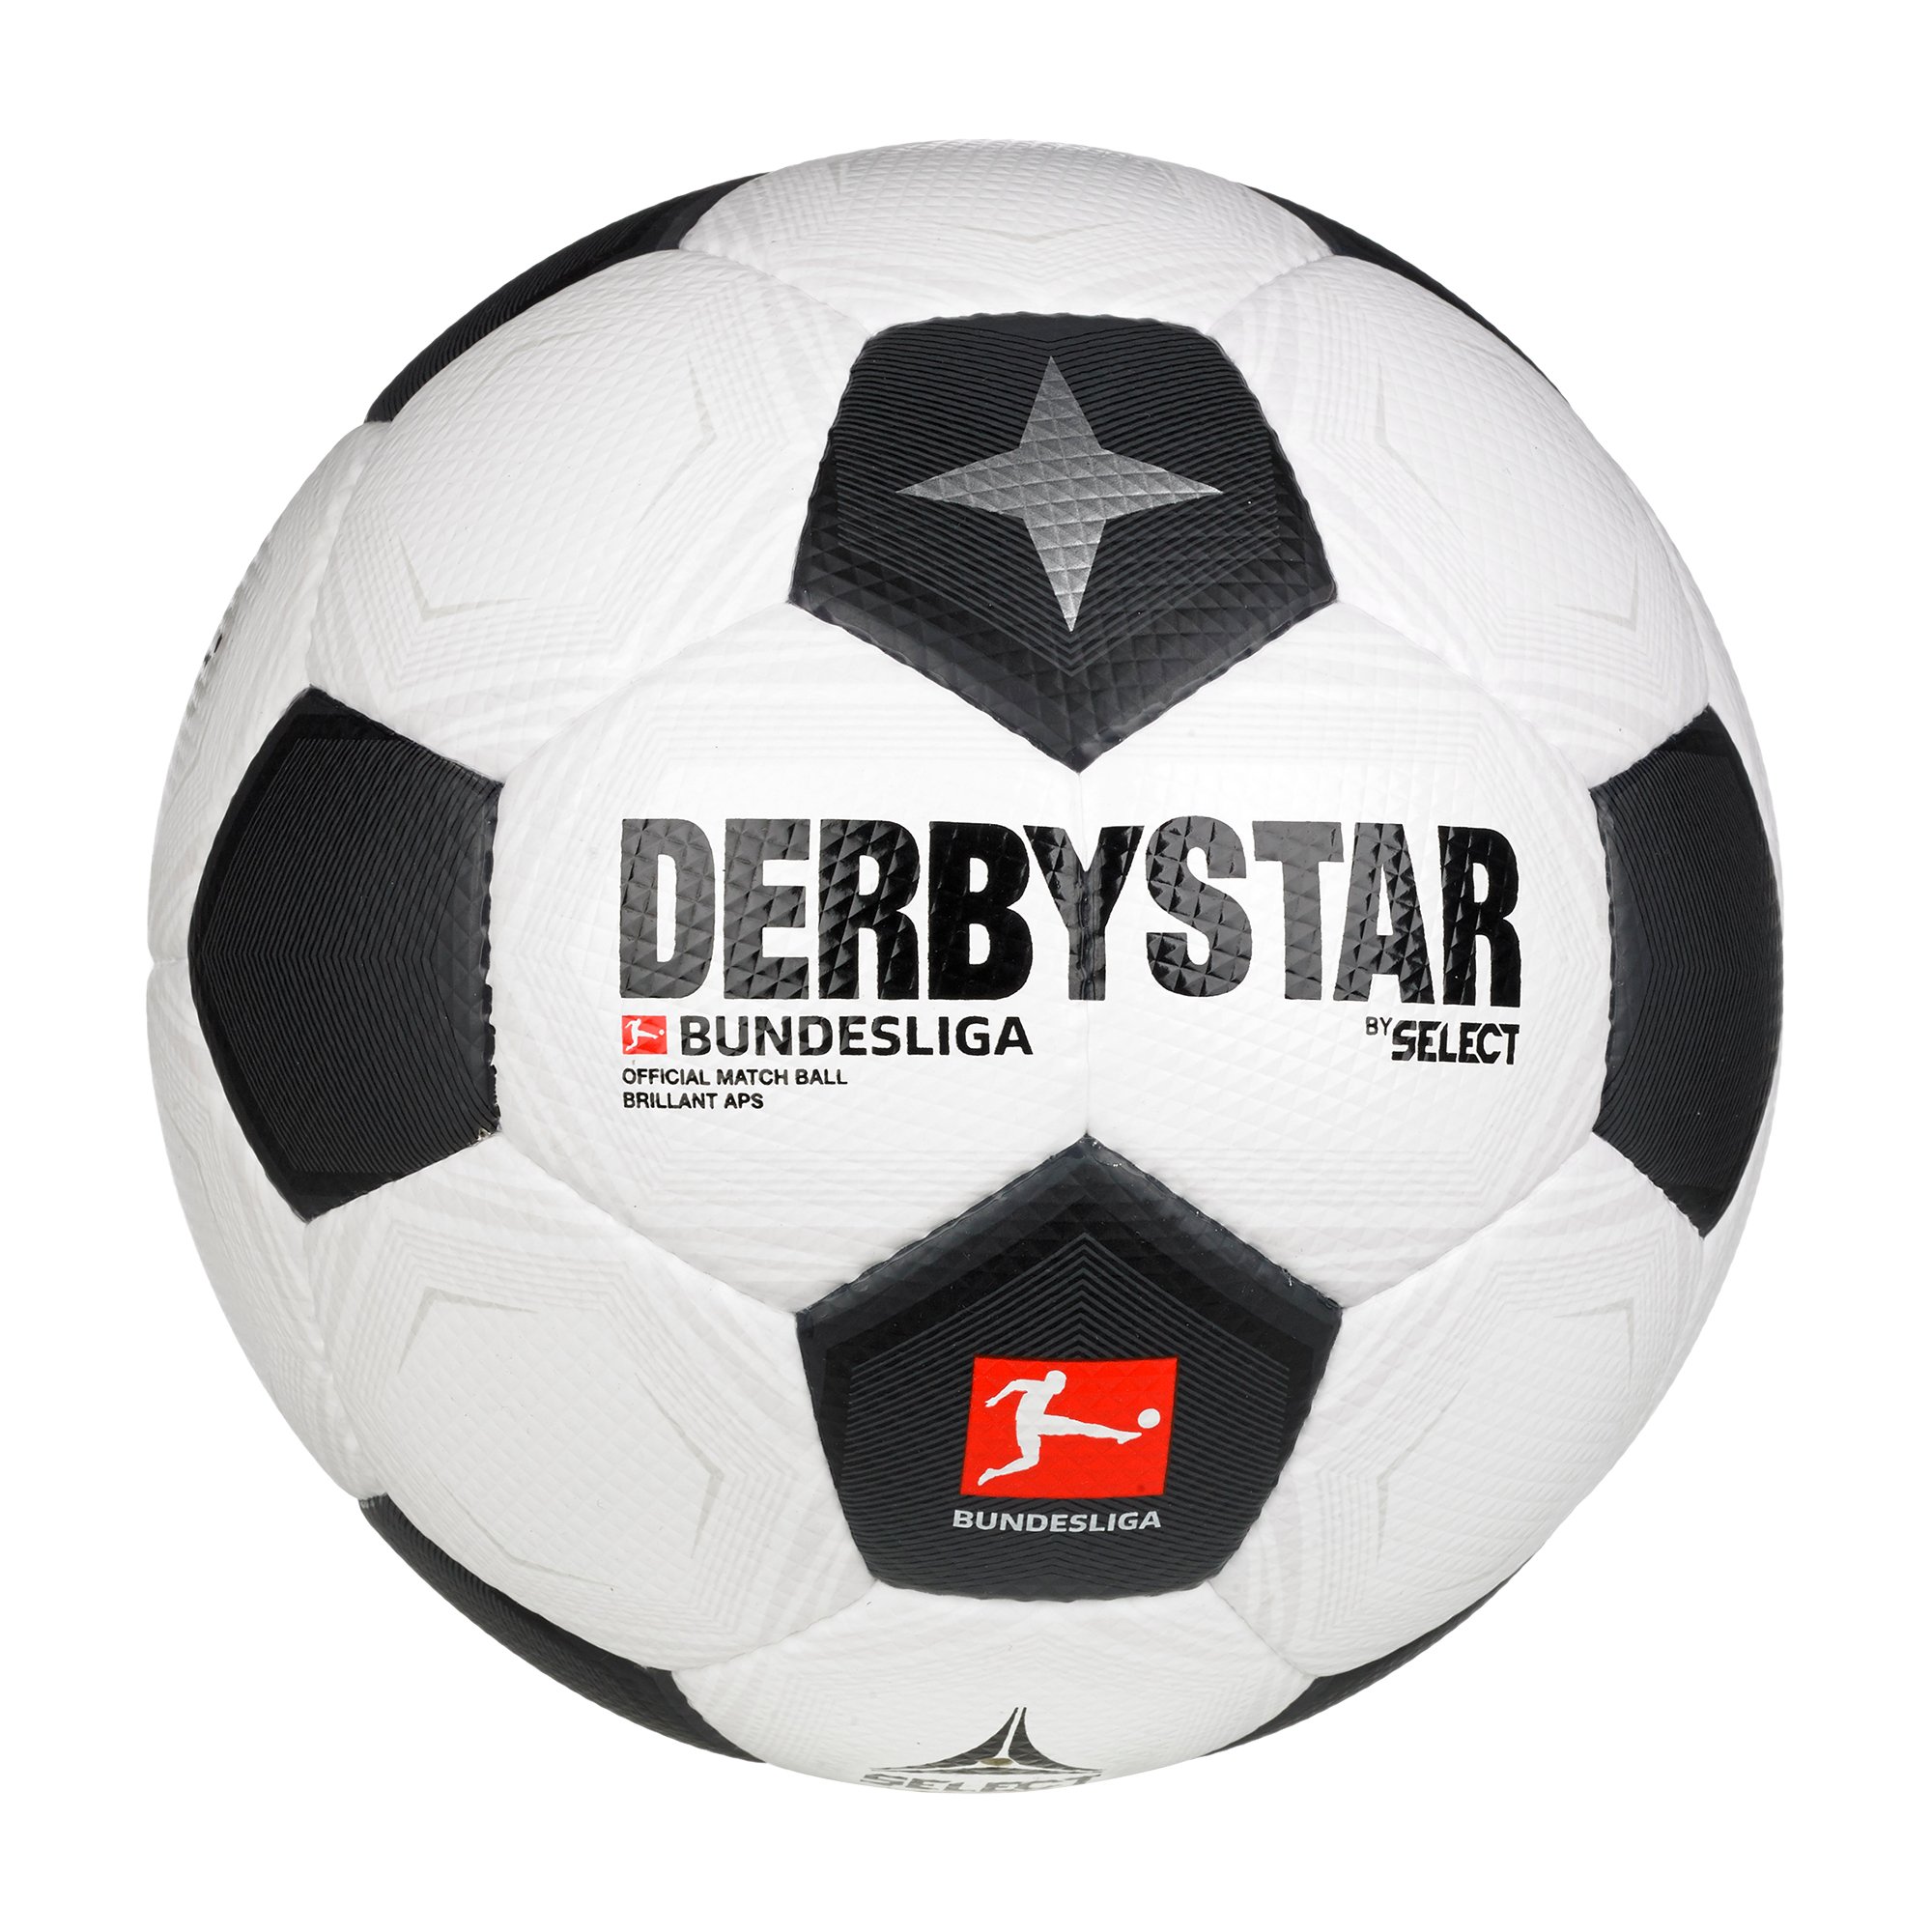 Derbystar Bundesliga Brillant APS Classic v23